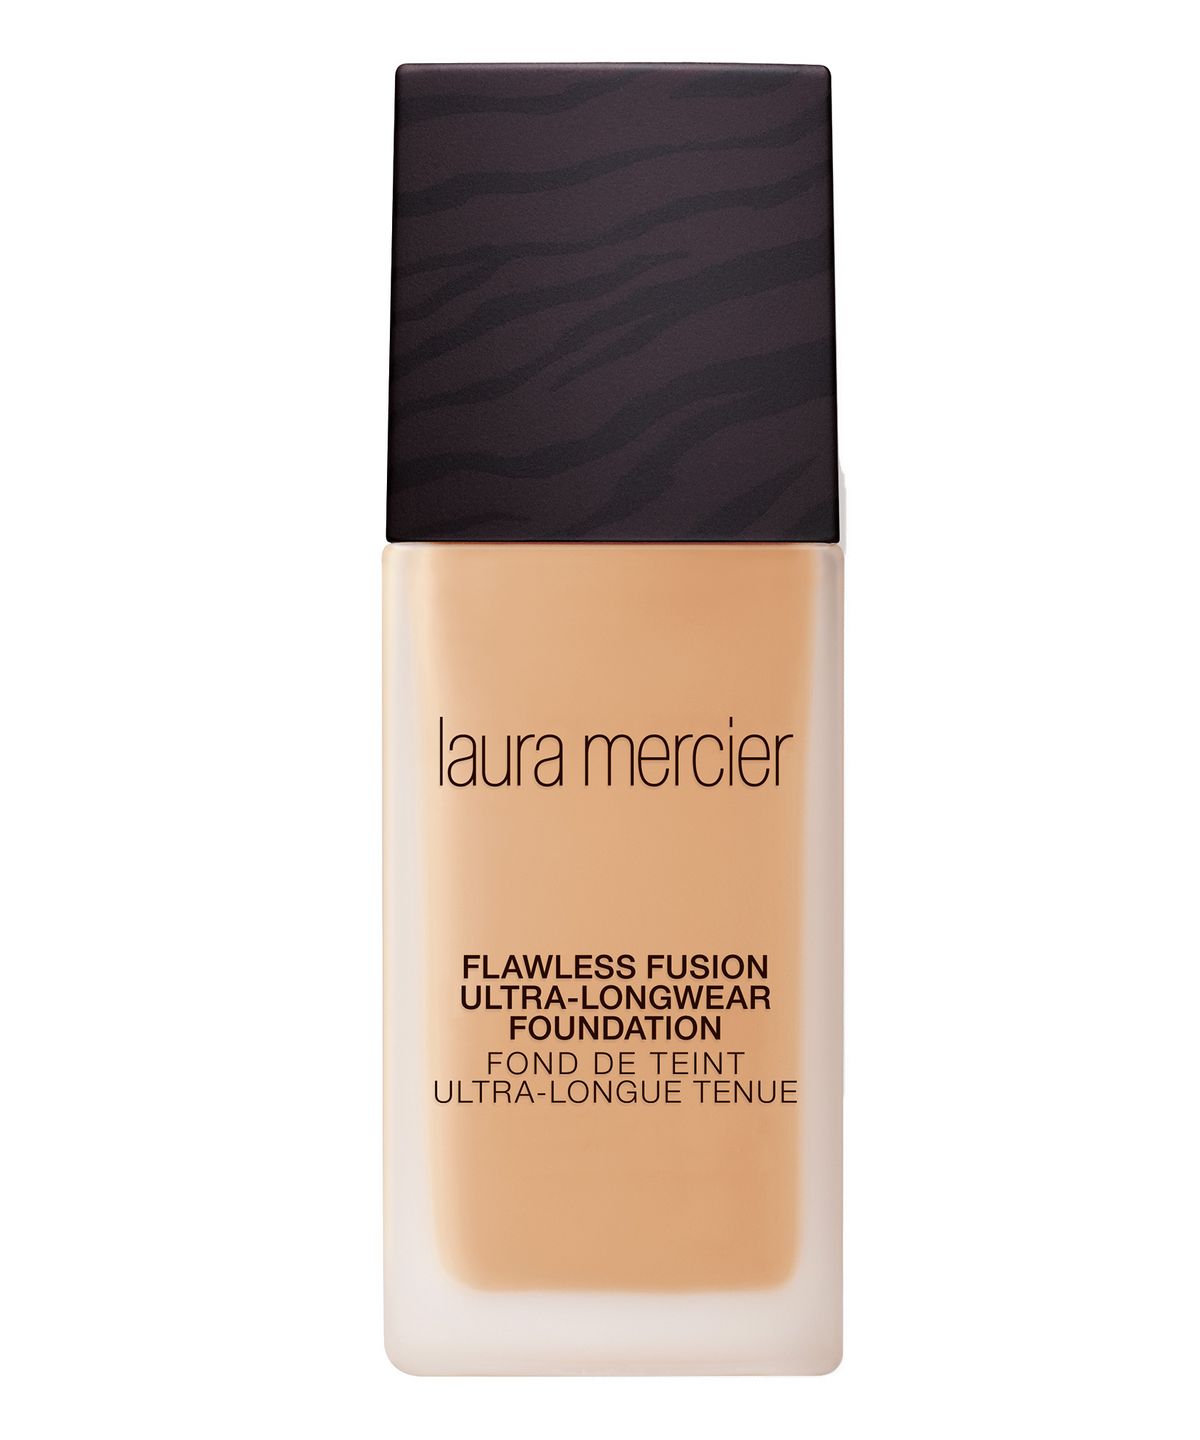 Laura Mercier - Flawless Fusion Ultra-Longwear Foundation - Honey